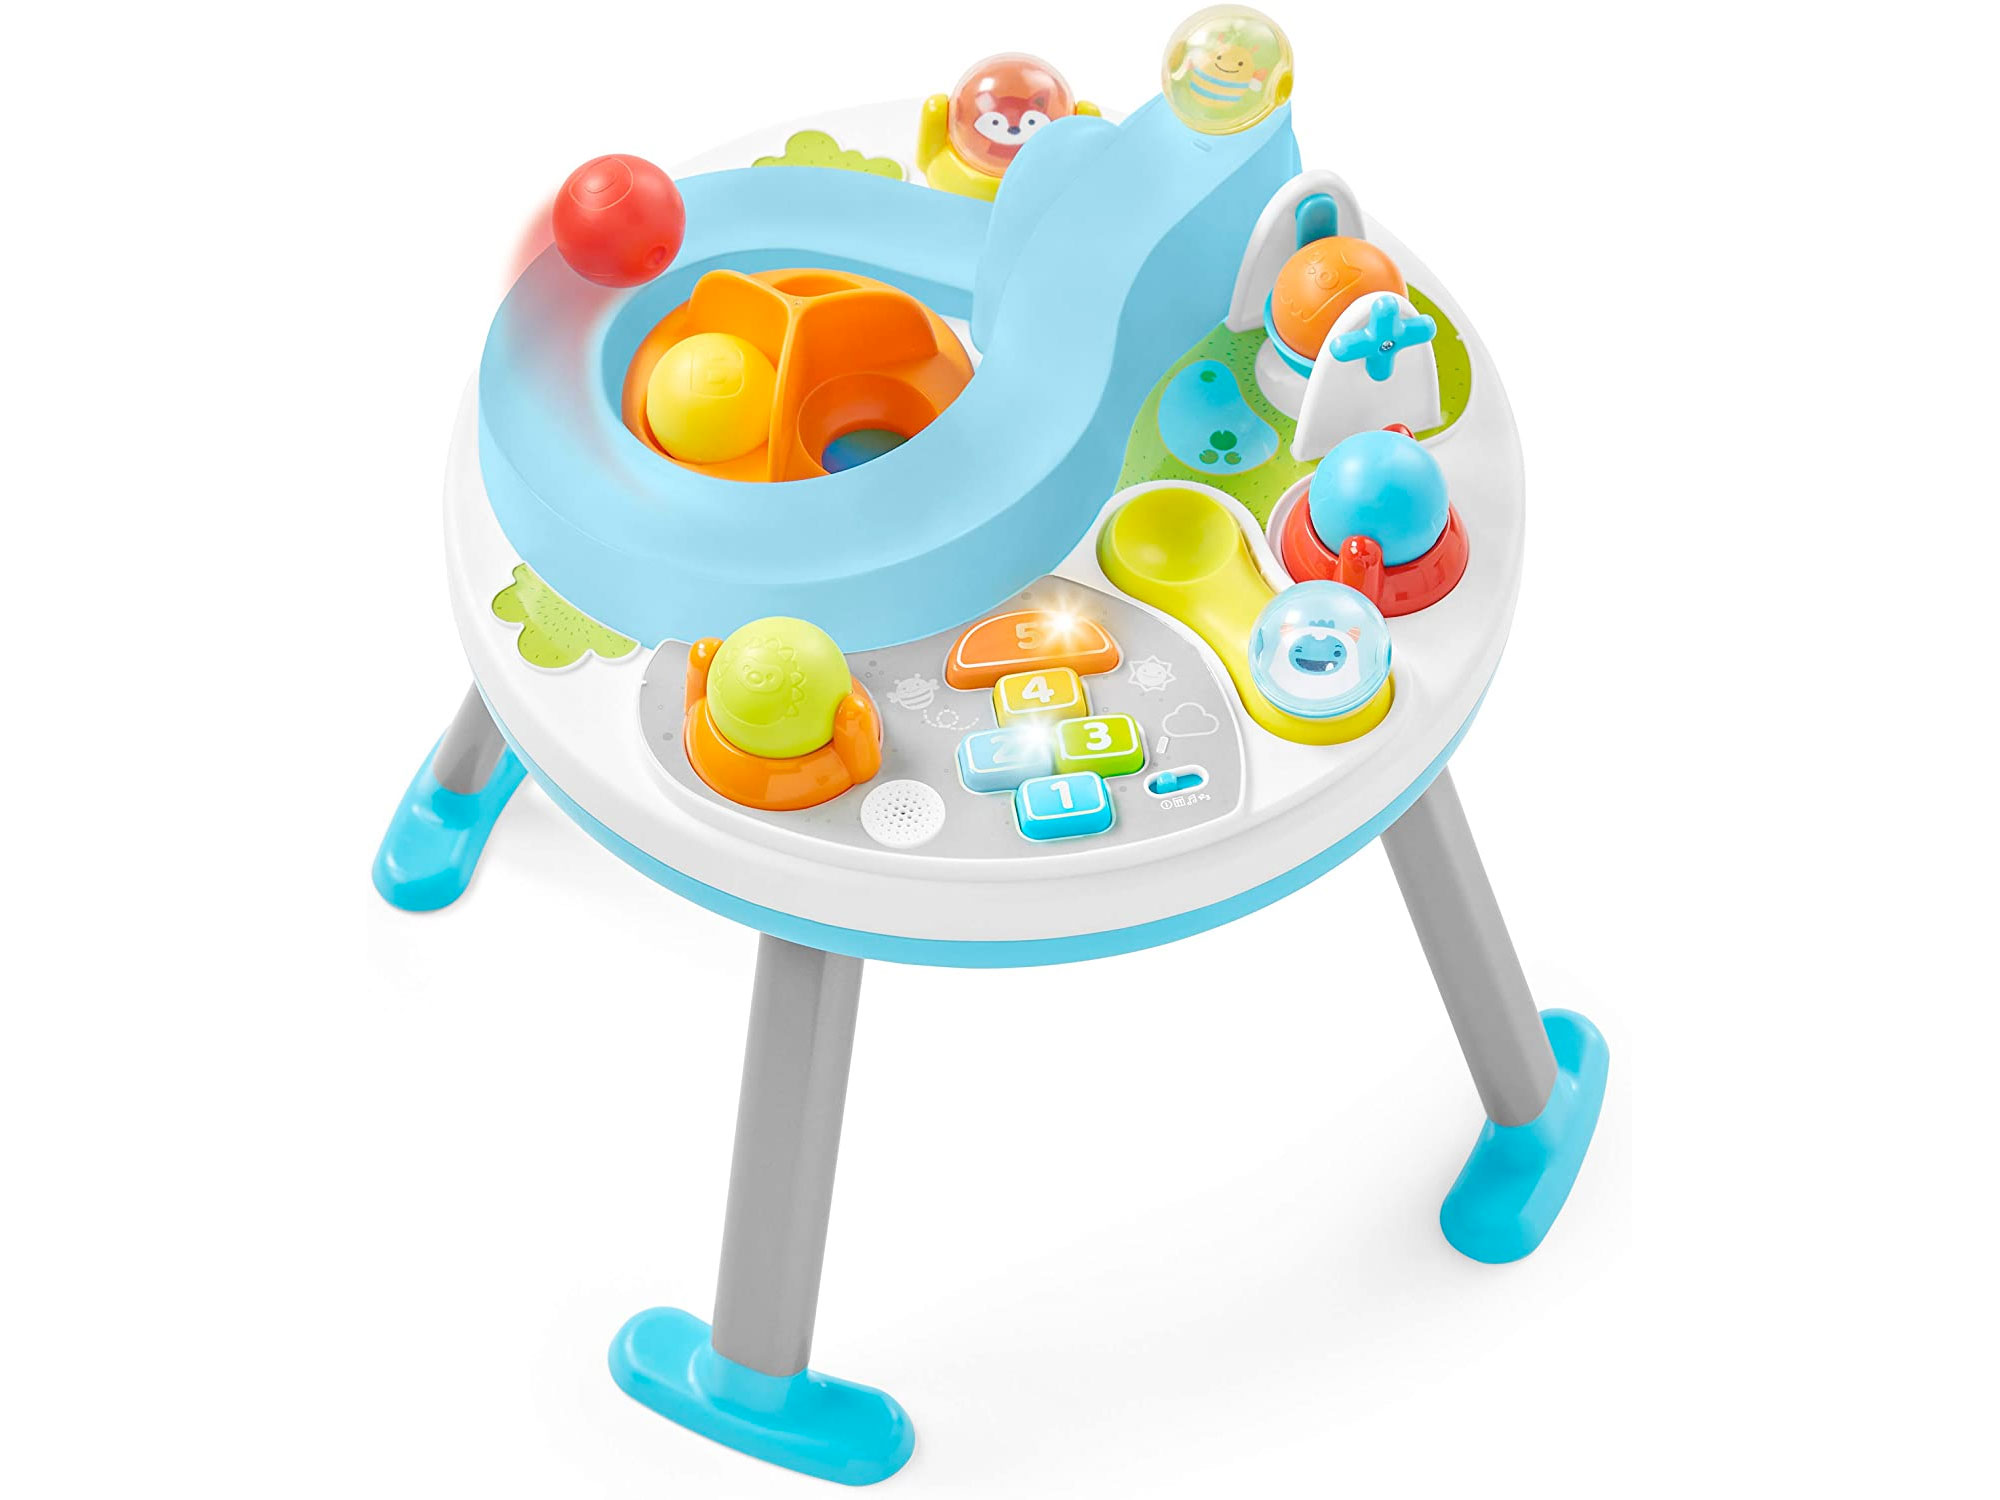 Amazon：Skip Hop 2-in-1 Baby Activity Table只賣$59.99